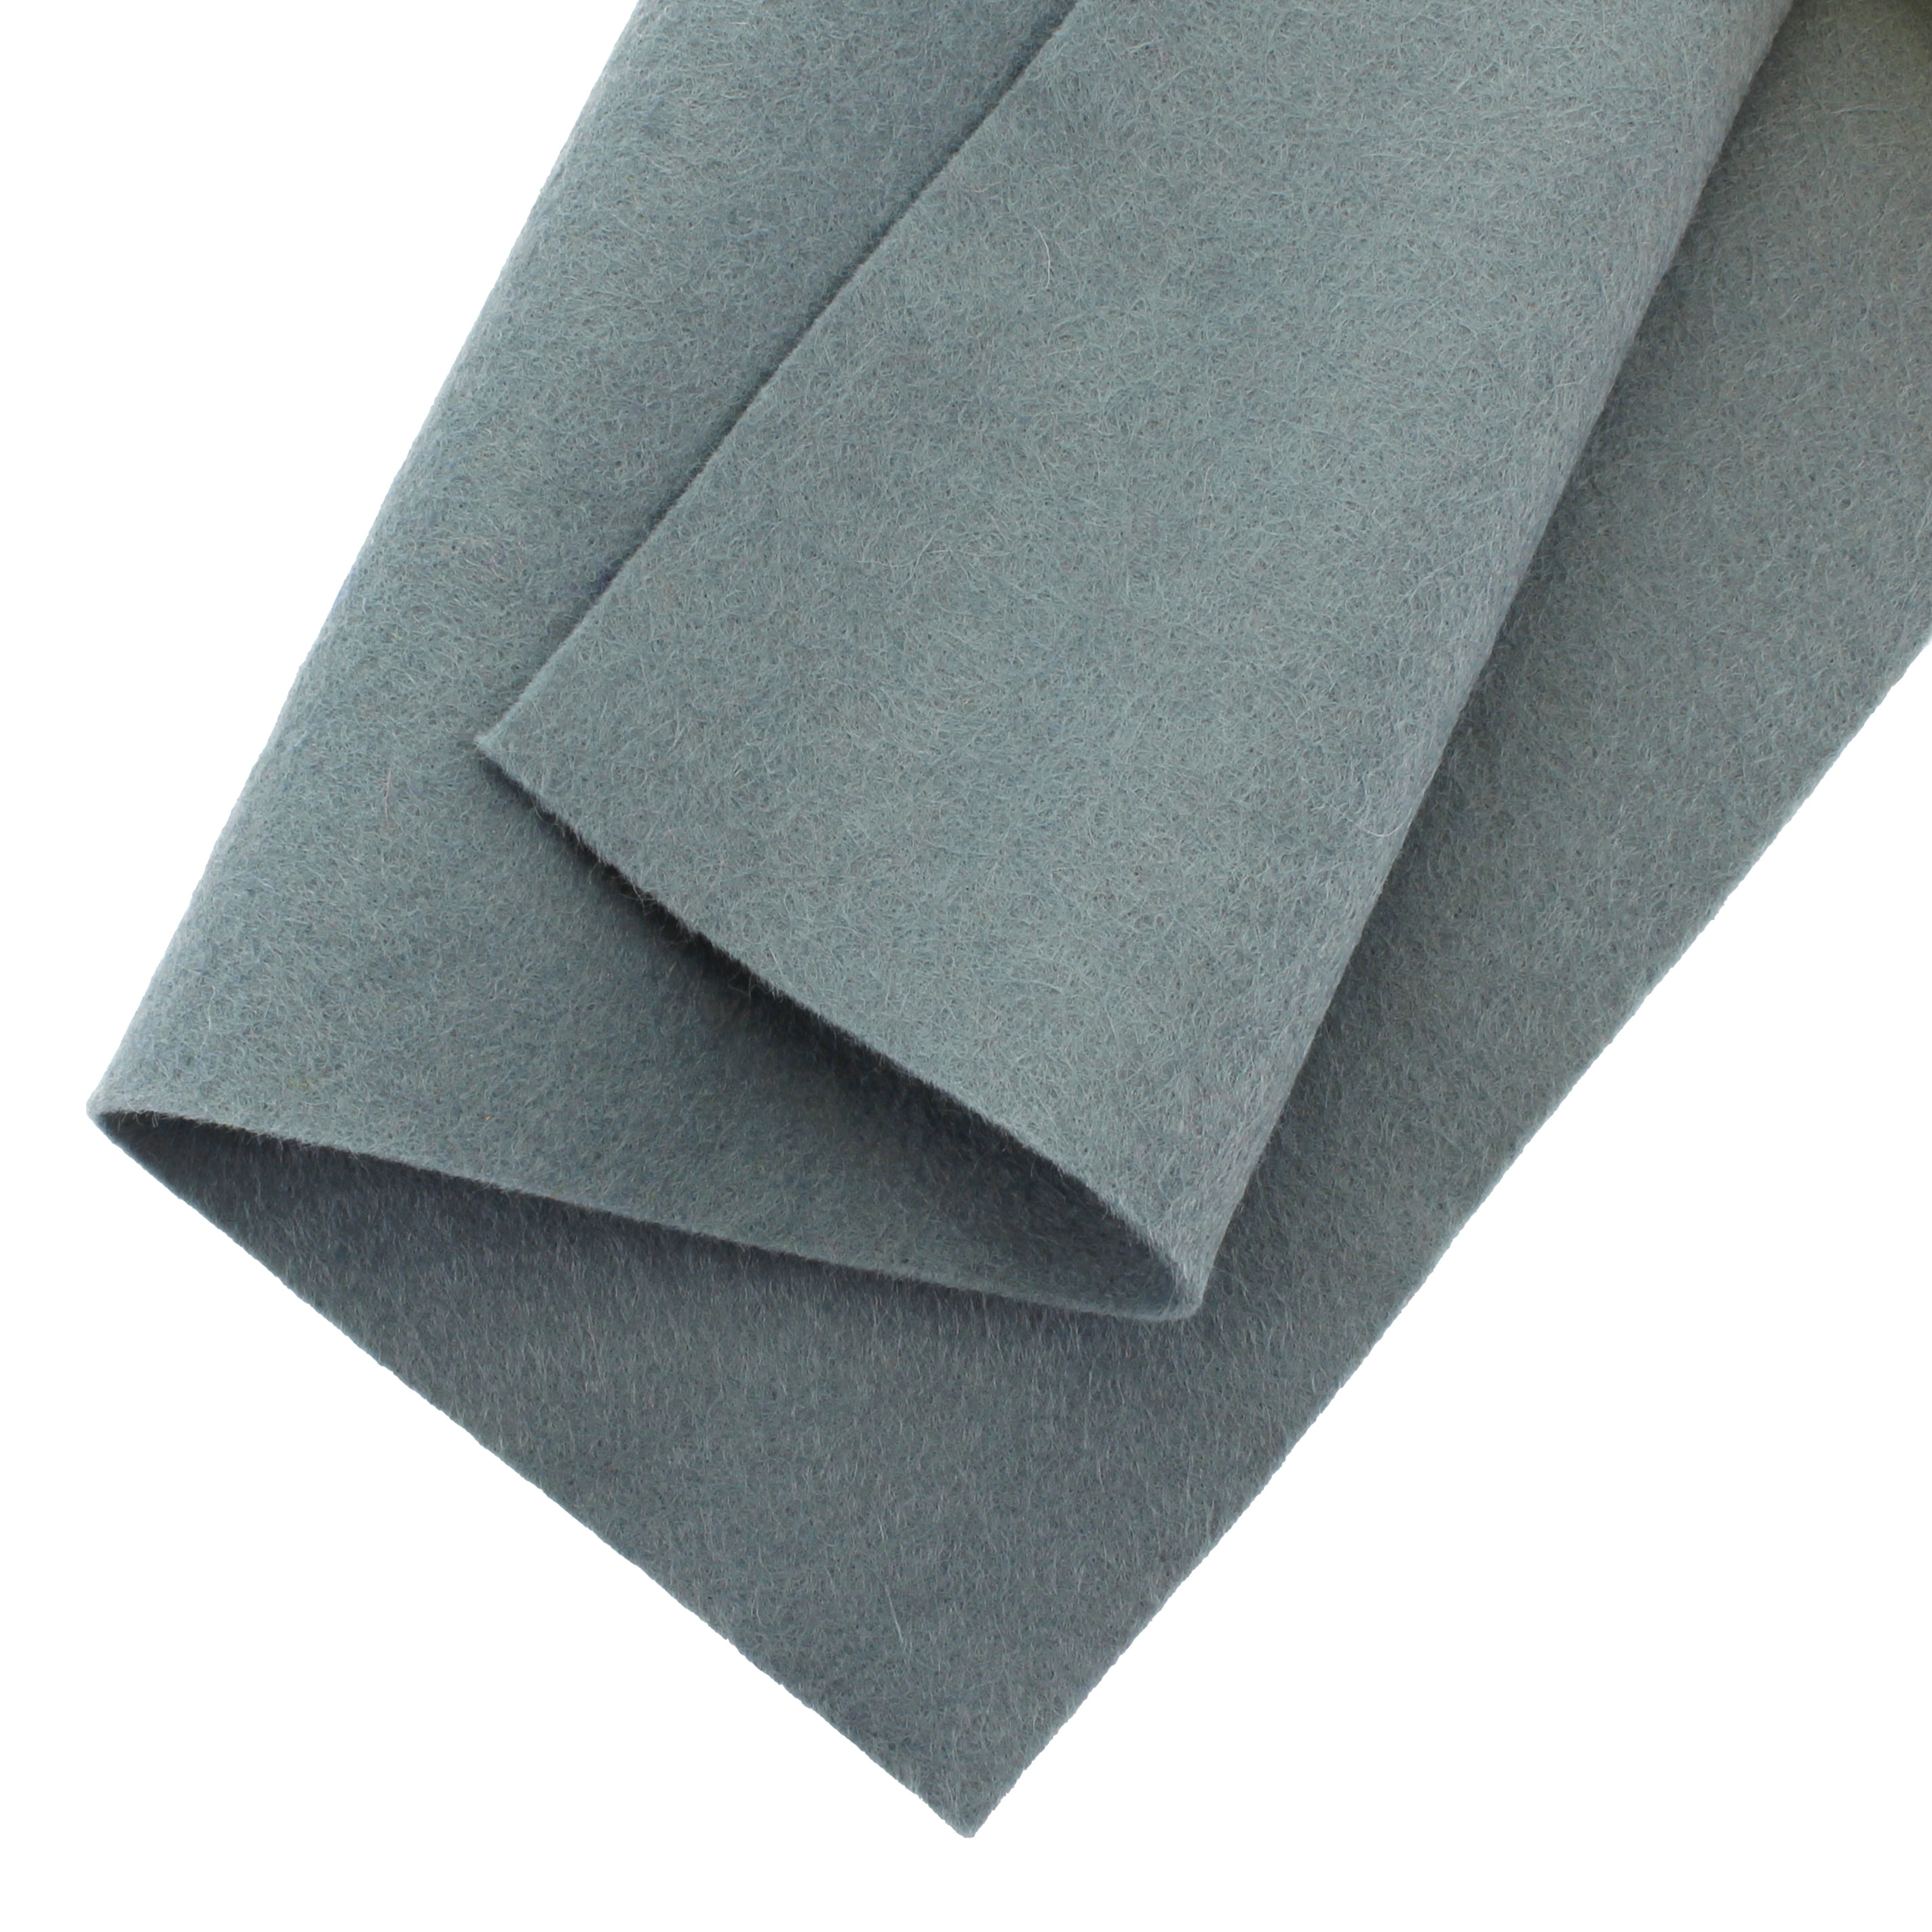 Black 40% Merino Wool Blend Adhesive Felt Crafting Sheets Sz A4 